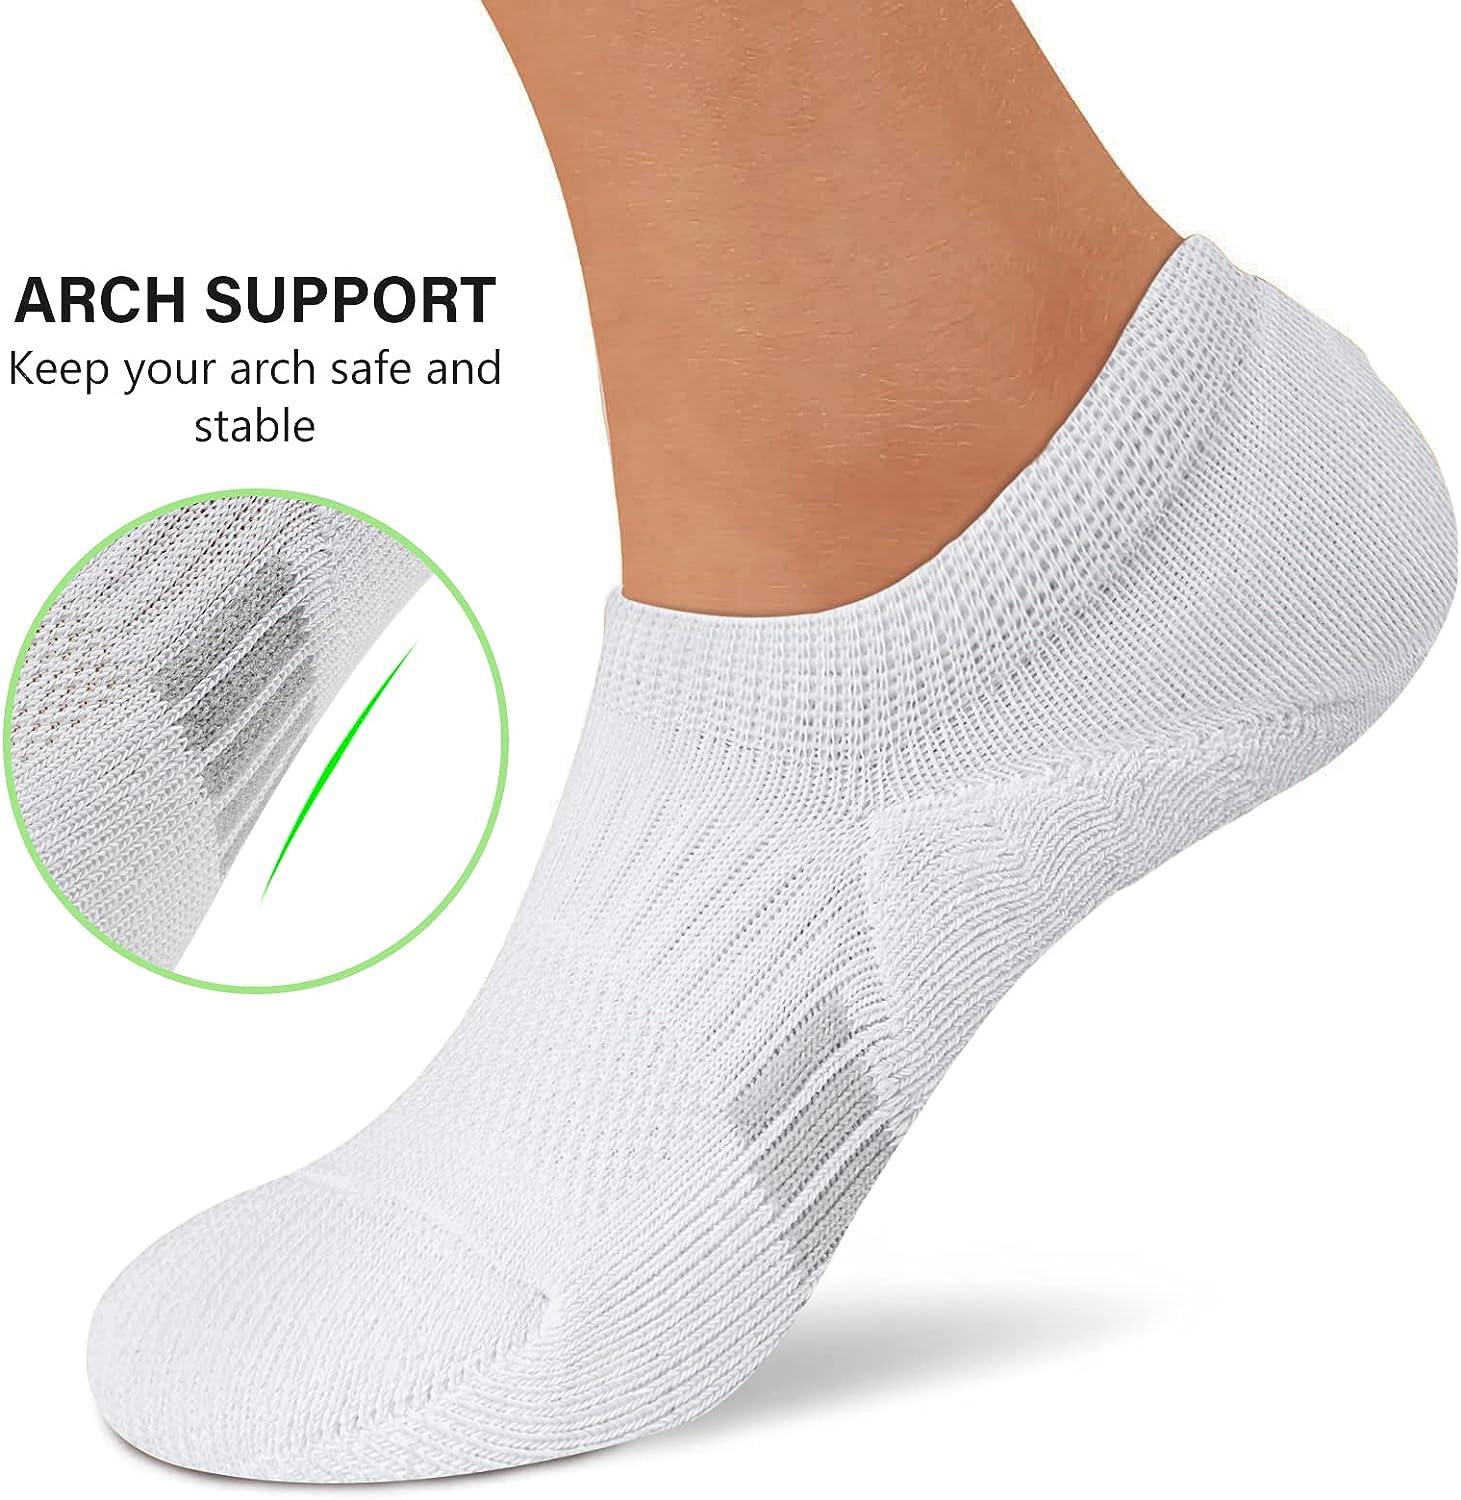 6pairs Women'S No Show Socks With Silicone Anti-Slip Heel Grip